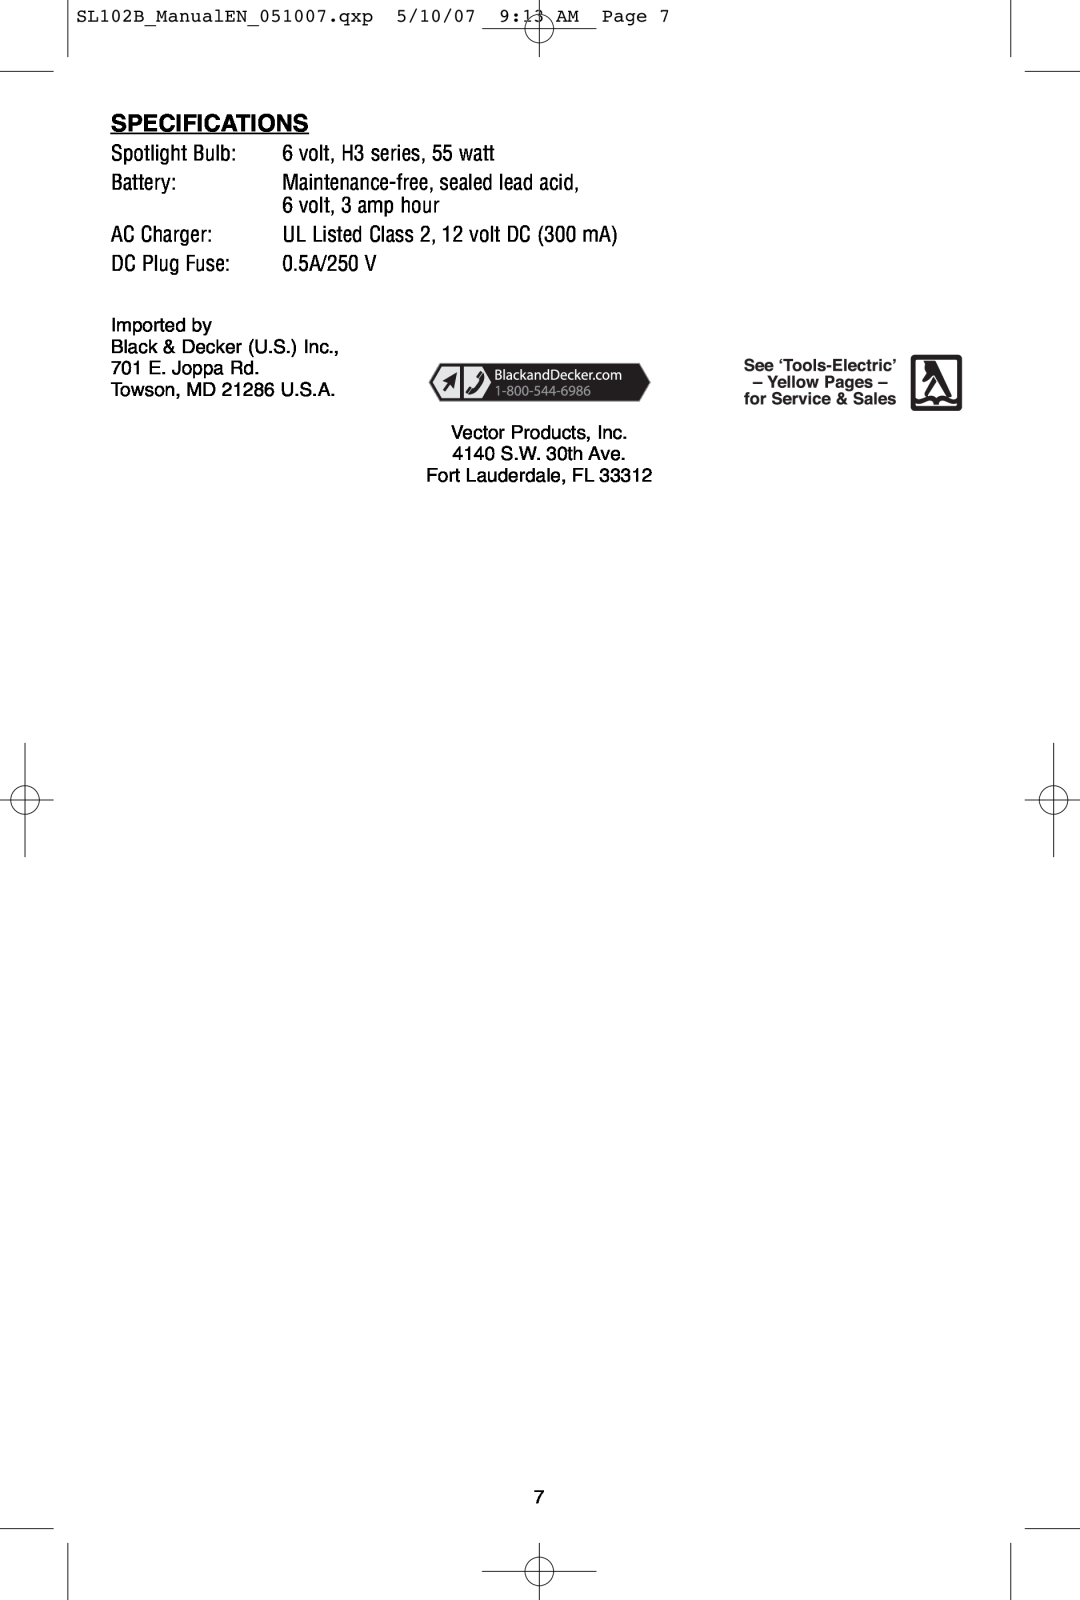 Black & Decker 90515795 Specifications, Spotlight Bulb, volt, H3 series, 55 watt, Battery, volt, 3 amp hour, AC Charger 